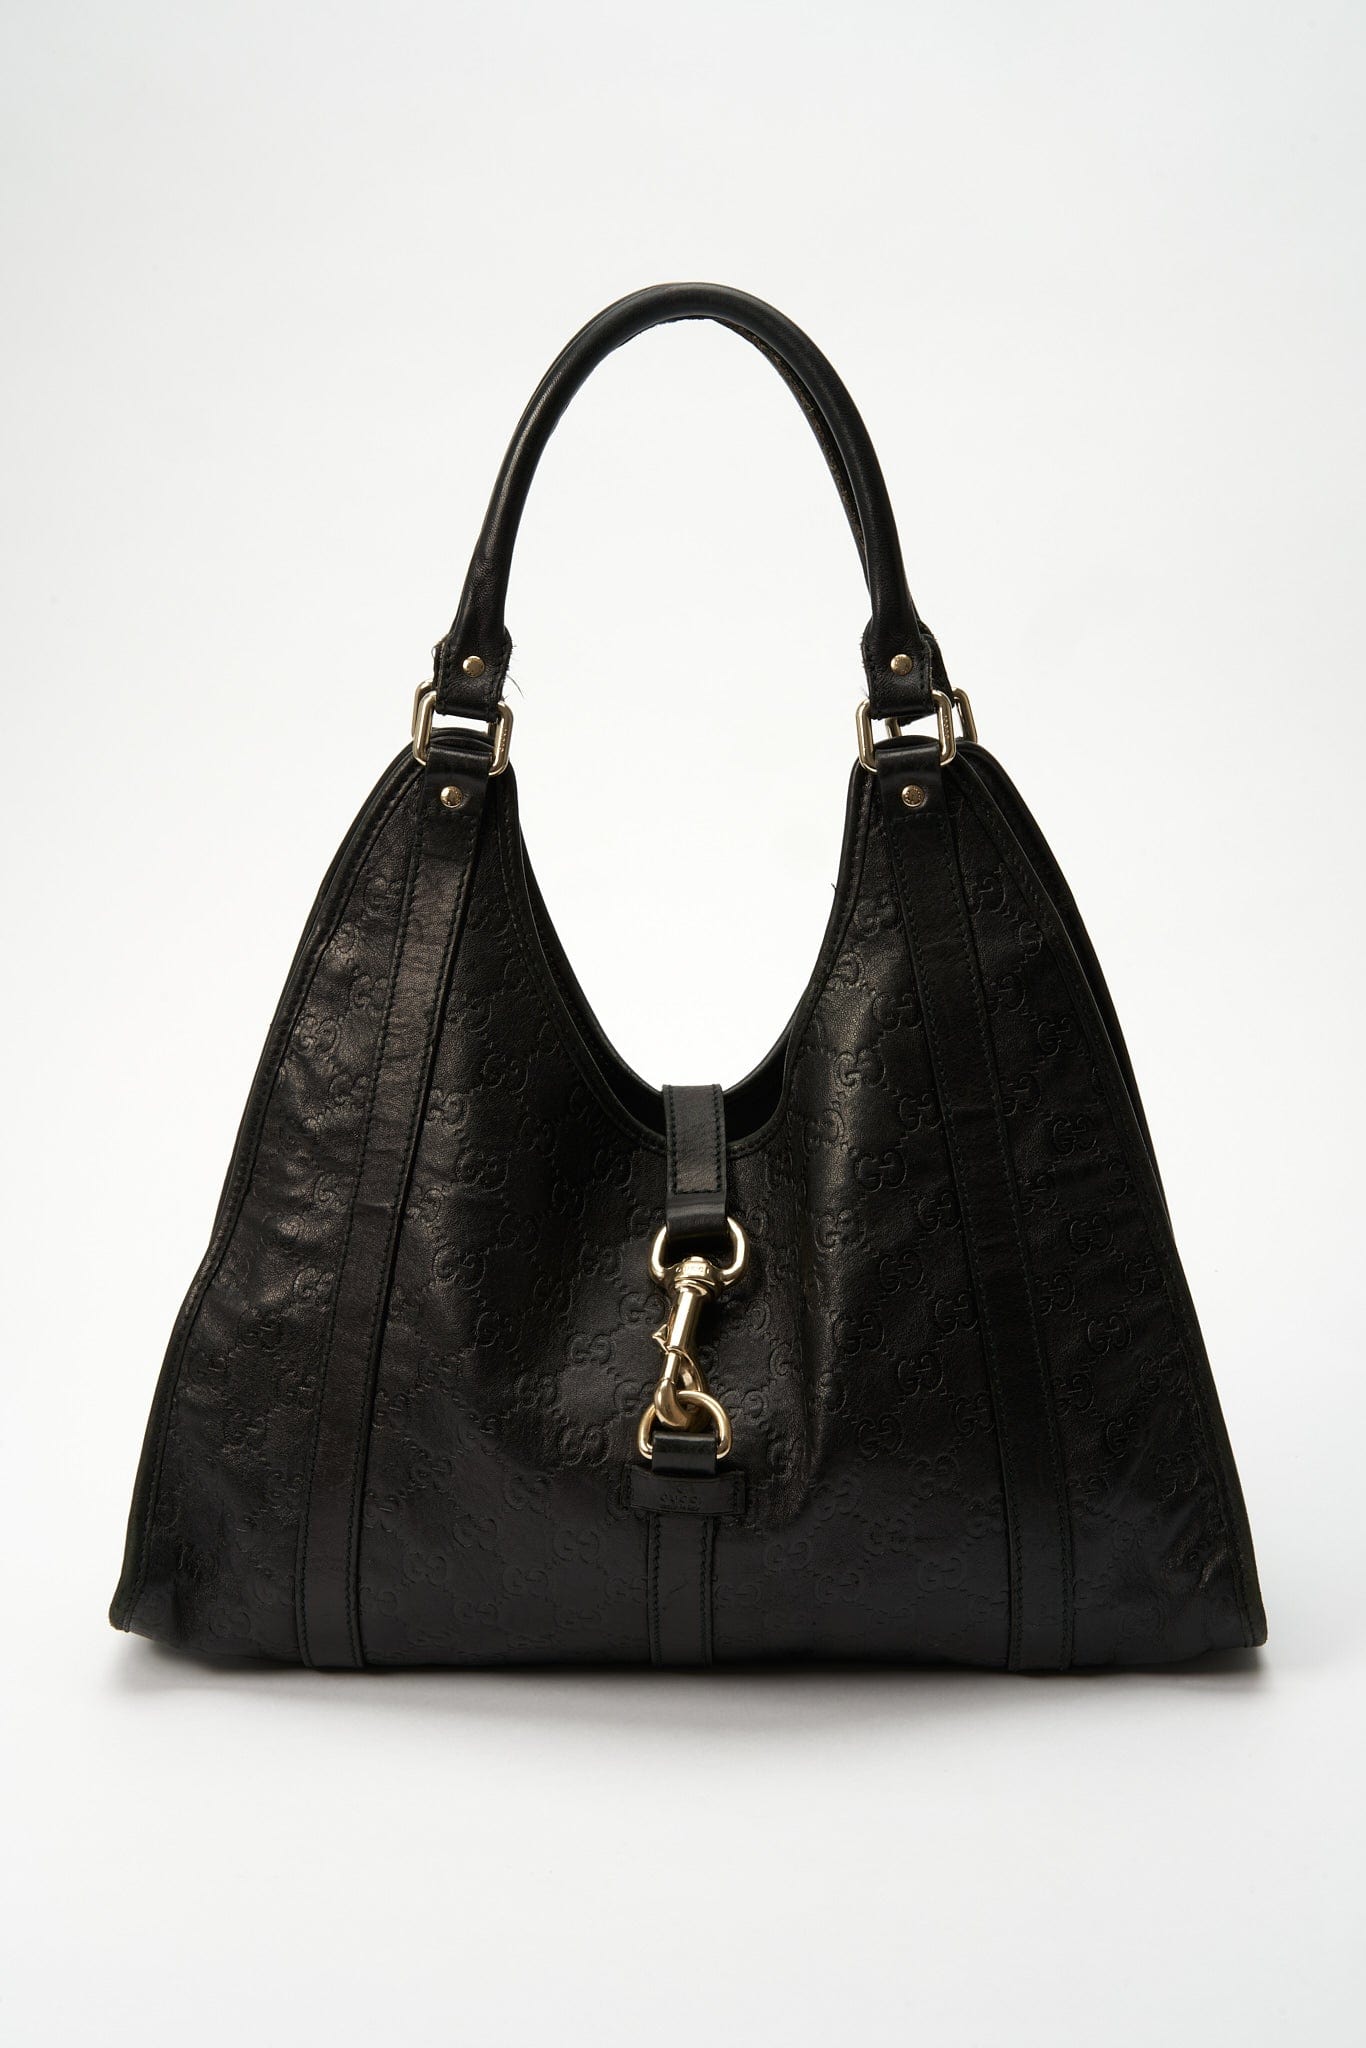 Stunning Vintage Gucci Box Bag - Black Leather – The Hosta